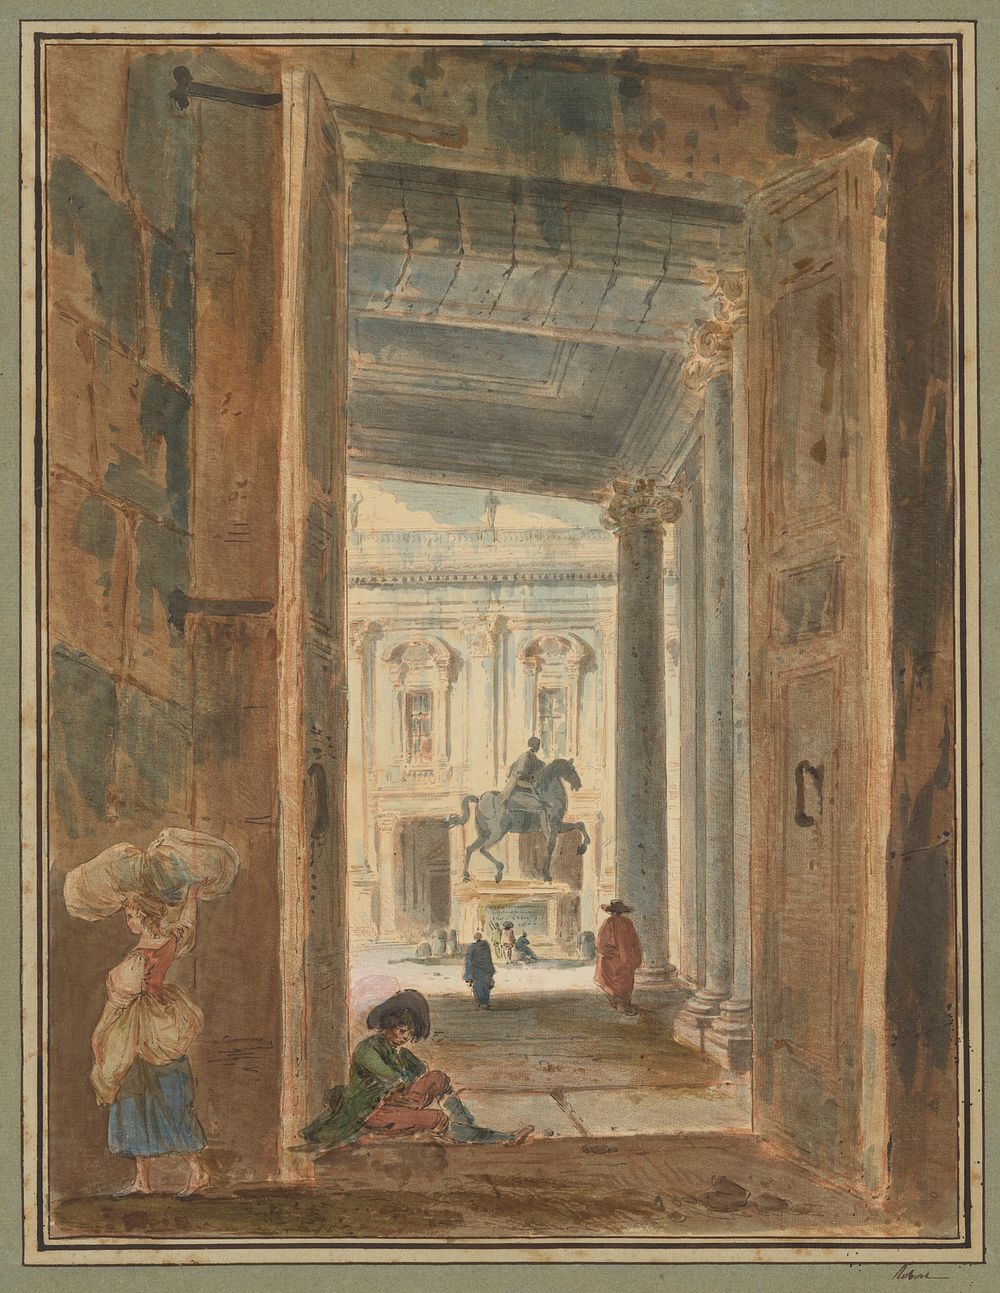 View of the Campidoglio with the Statue of Marcus Aurelius by Hubert Robert